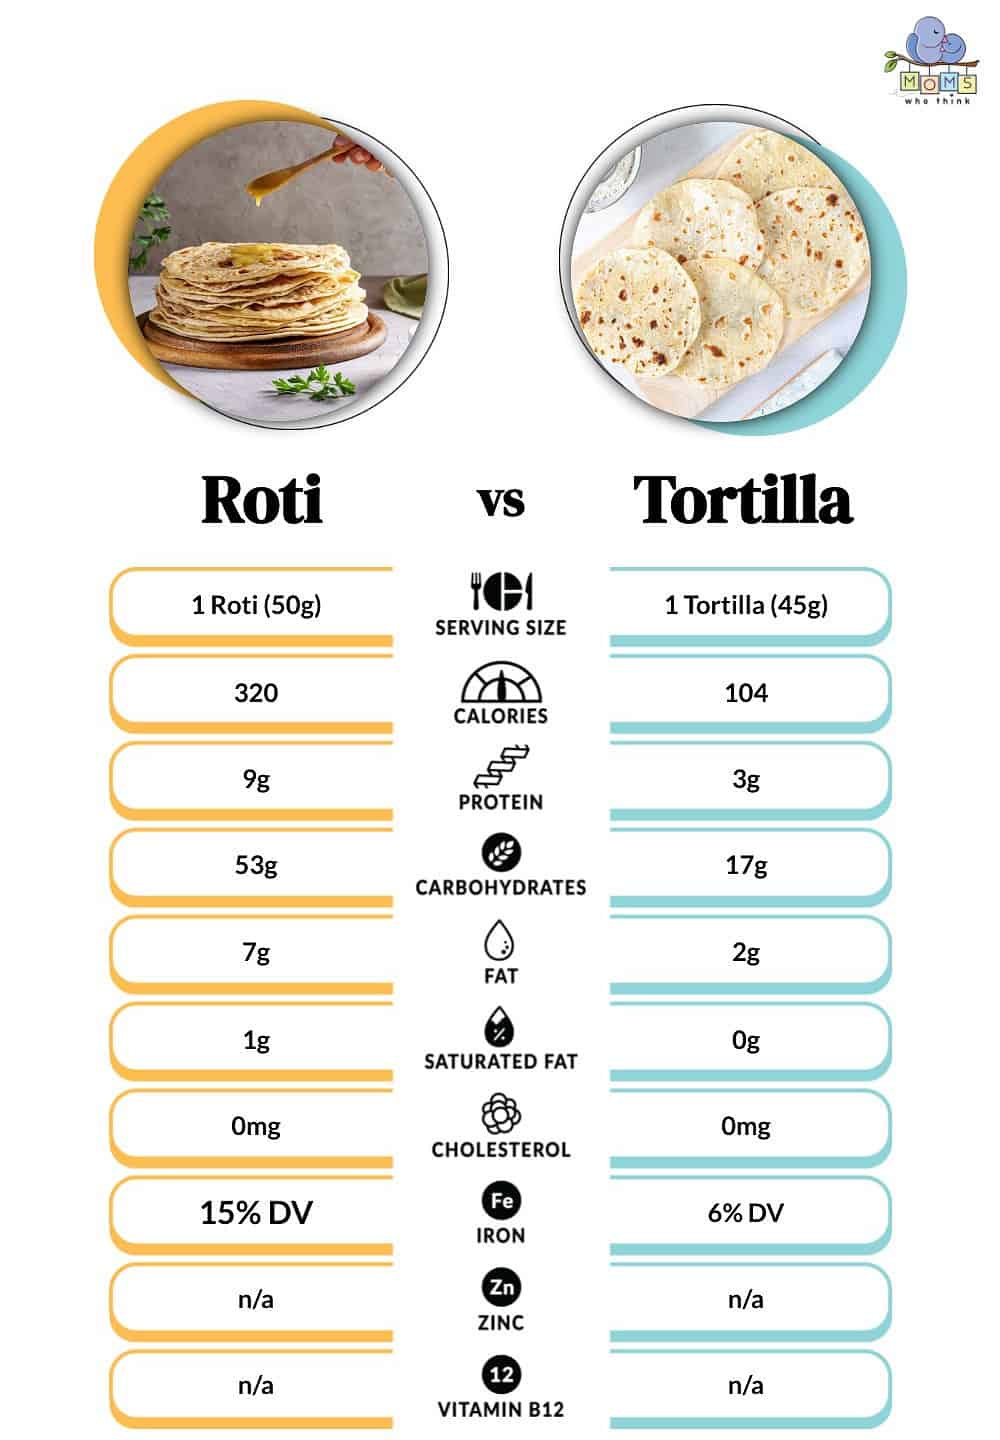 Roti vs Tortilla Nutritional Facts